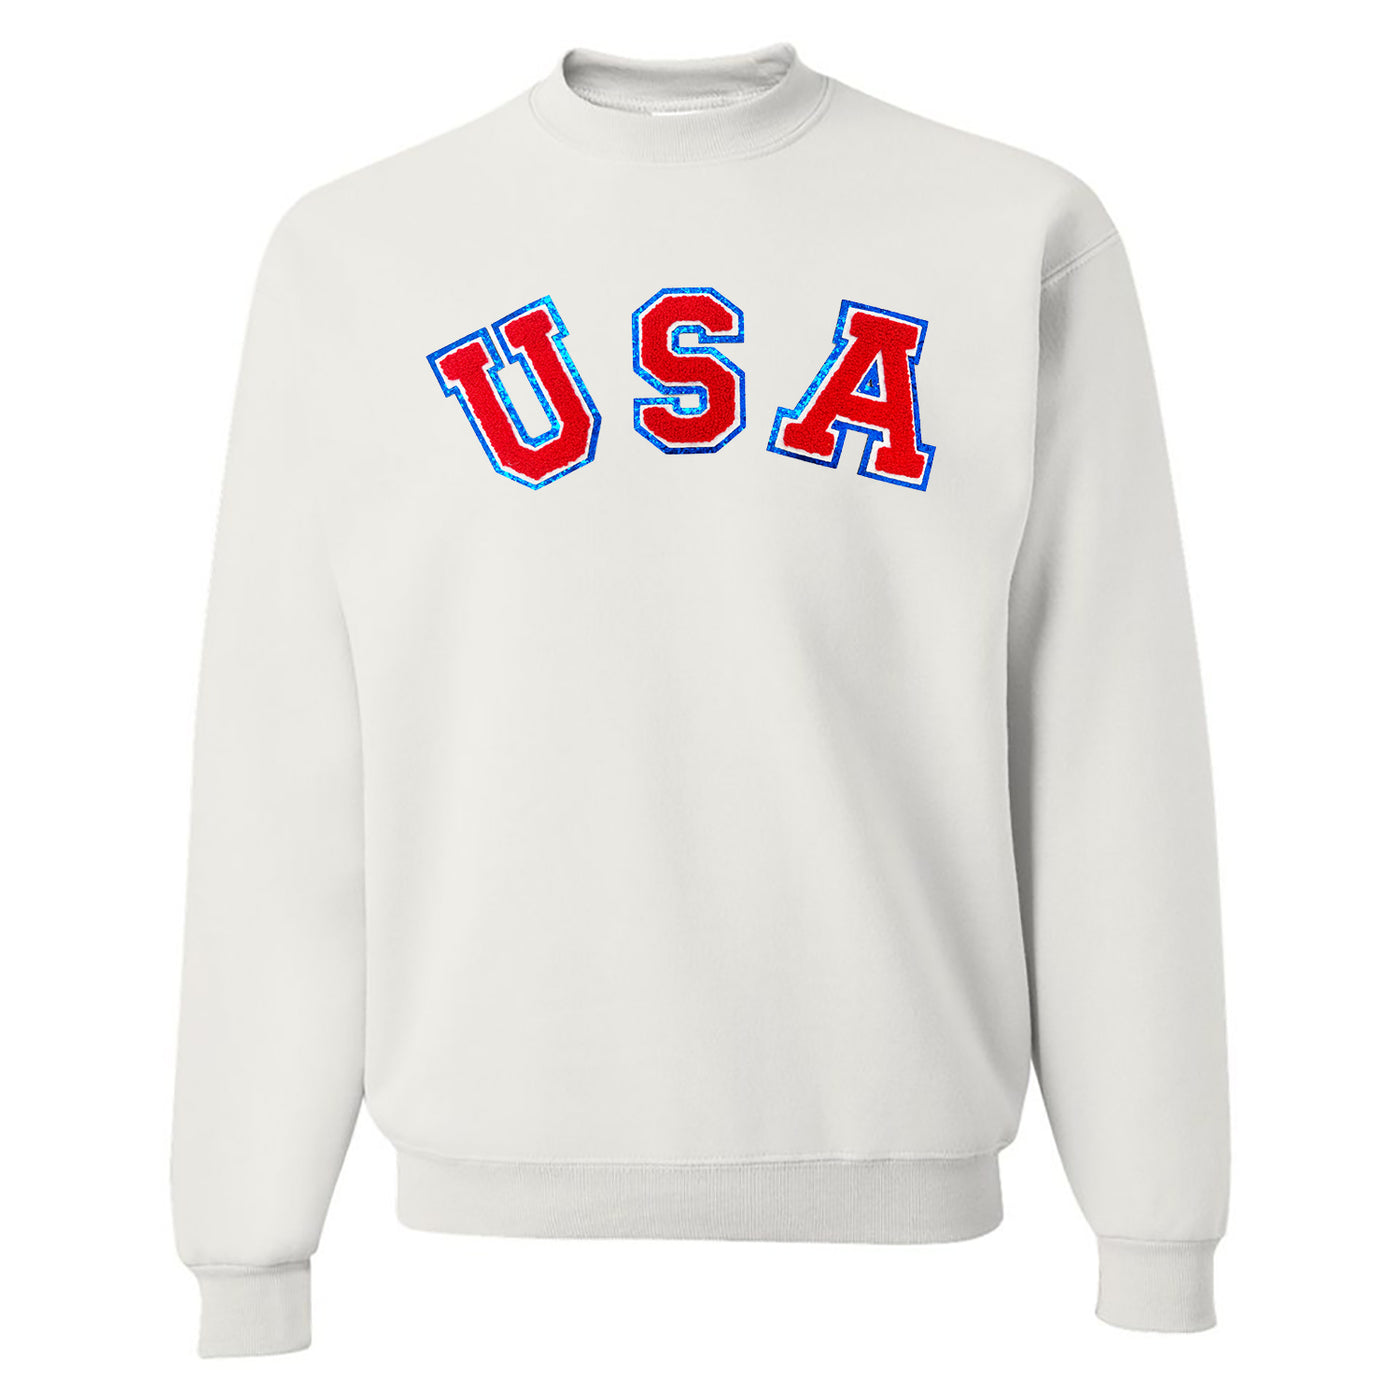 USA Letter Patch Crewneck Sweatshirt